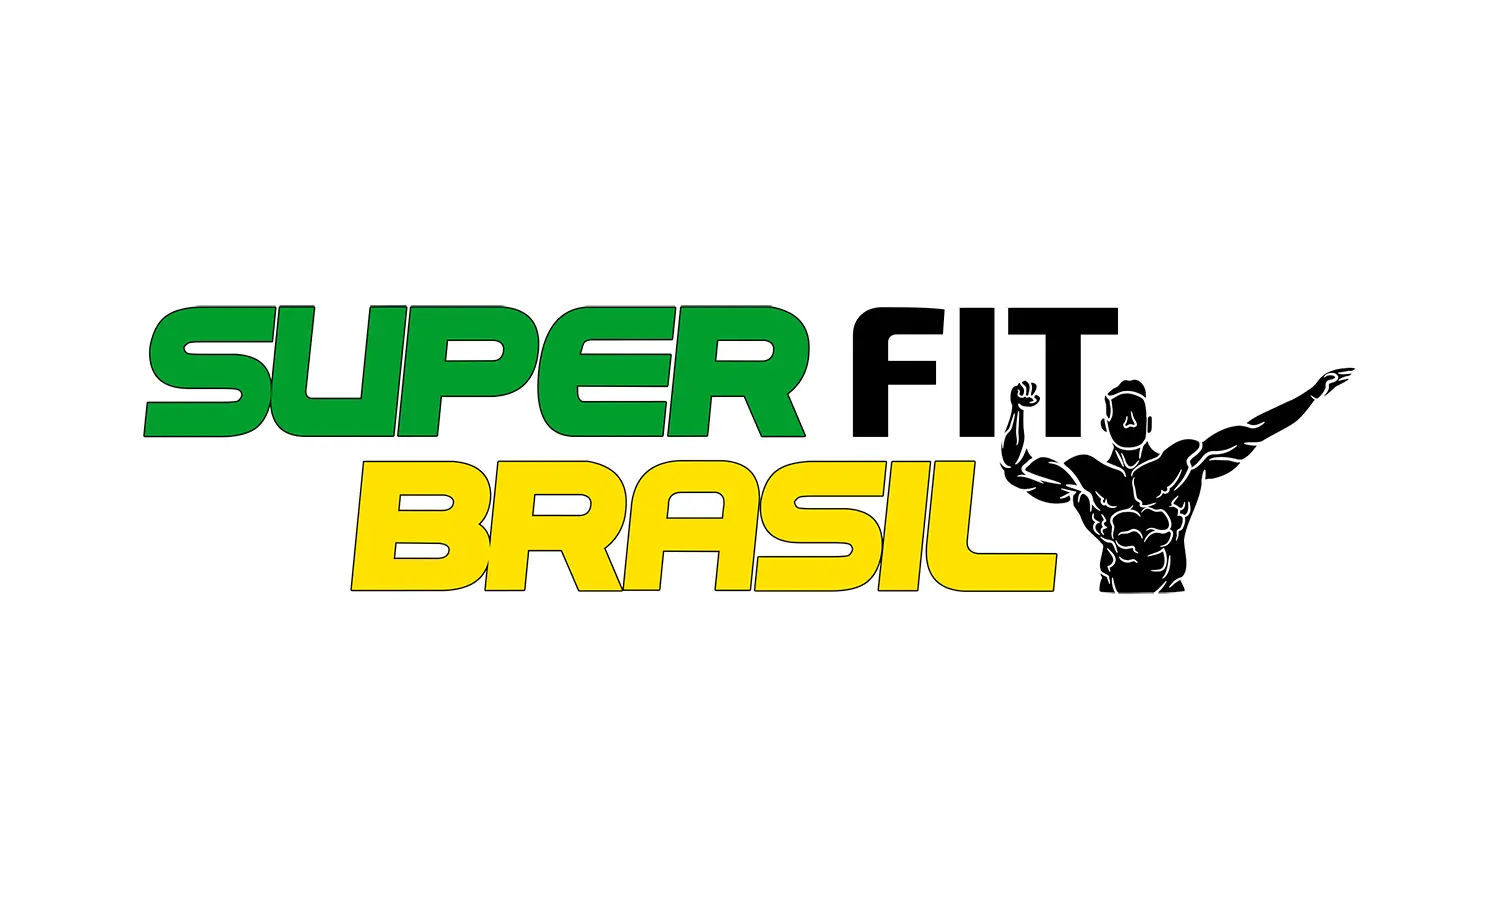 https://www.superfitbrasil.com.br/evertonalves/assets/images/sfbofc.webp